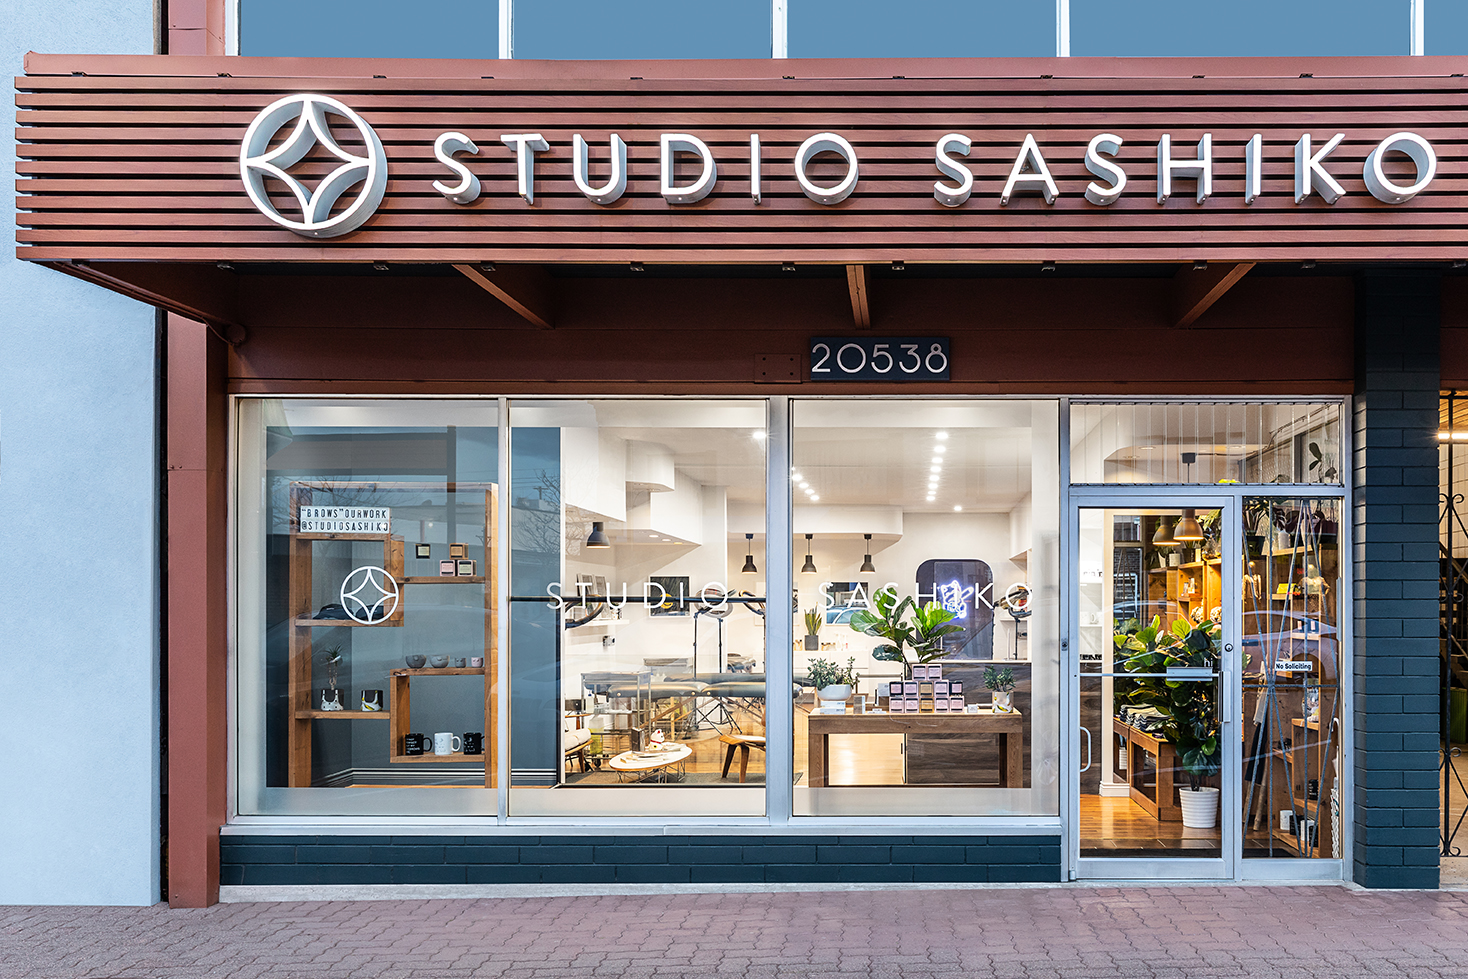 Studio Sashiko